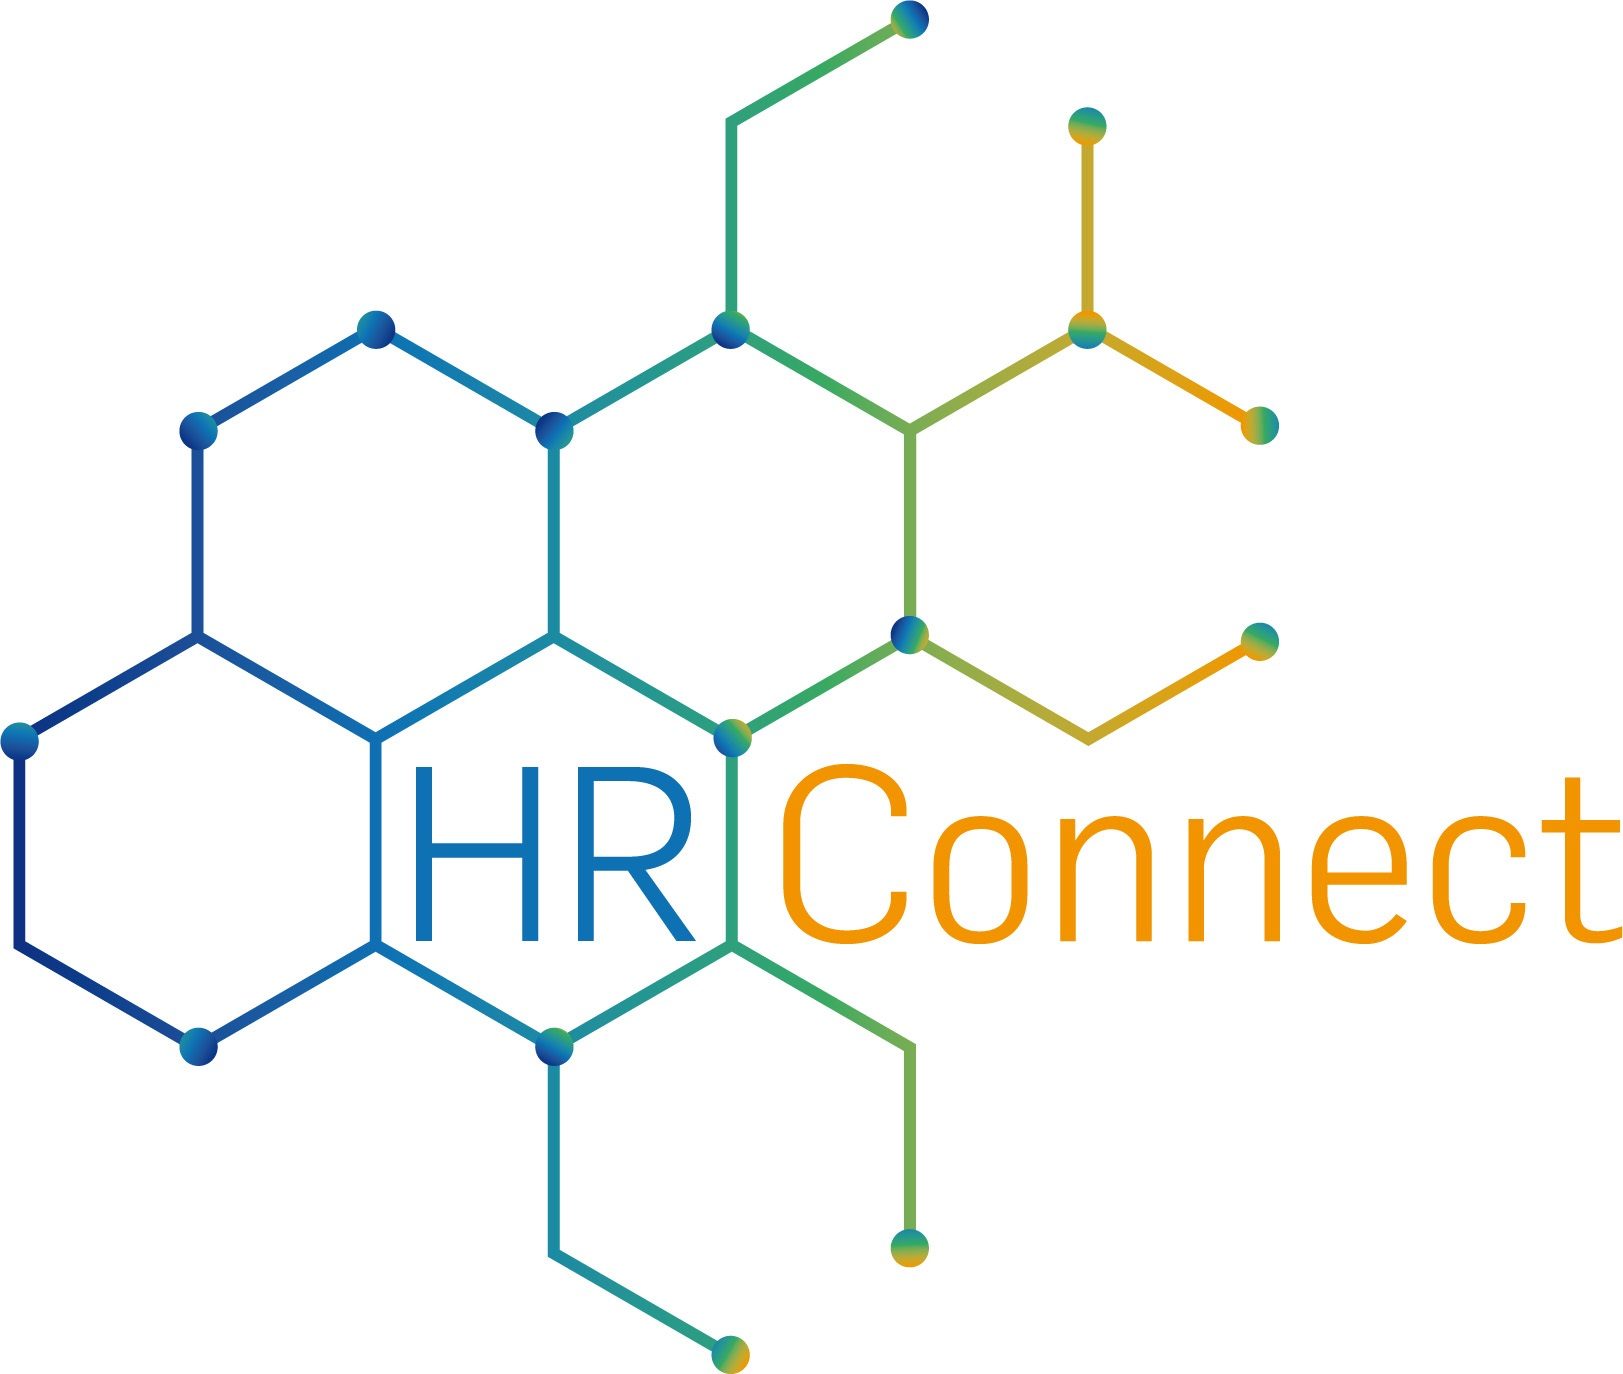 HR Connect Solution …a HR partner…